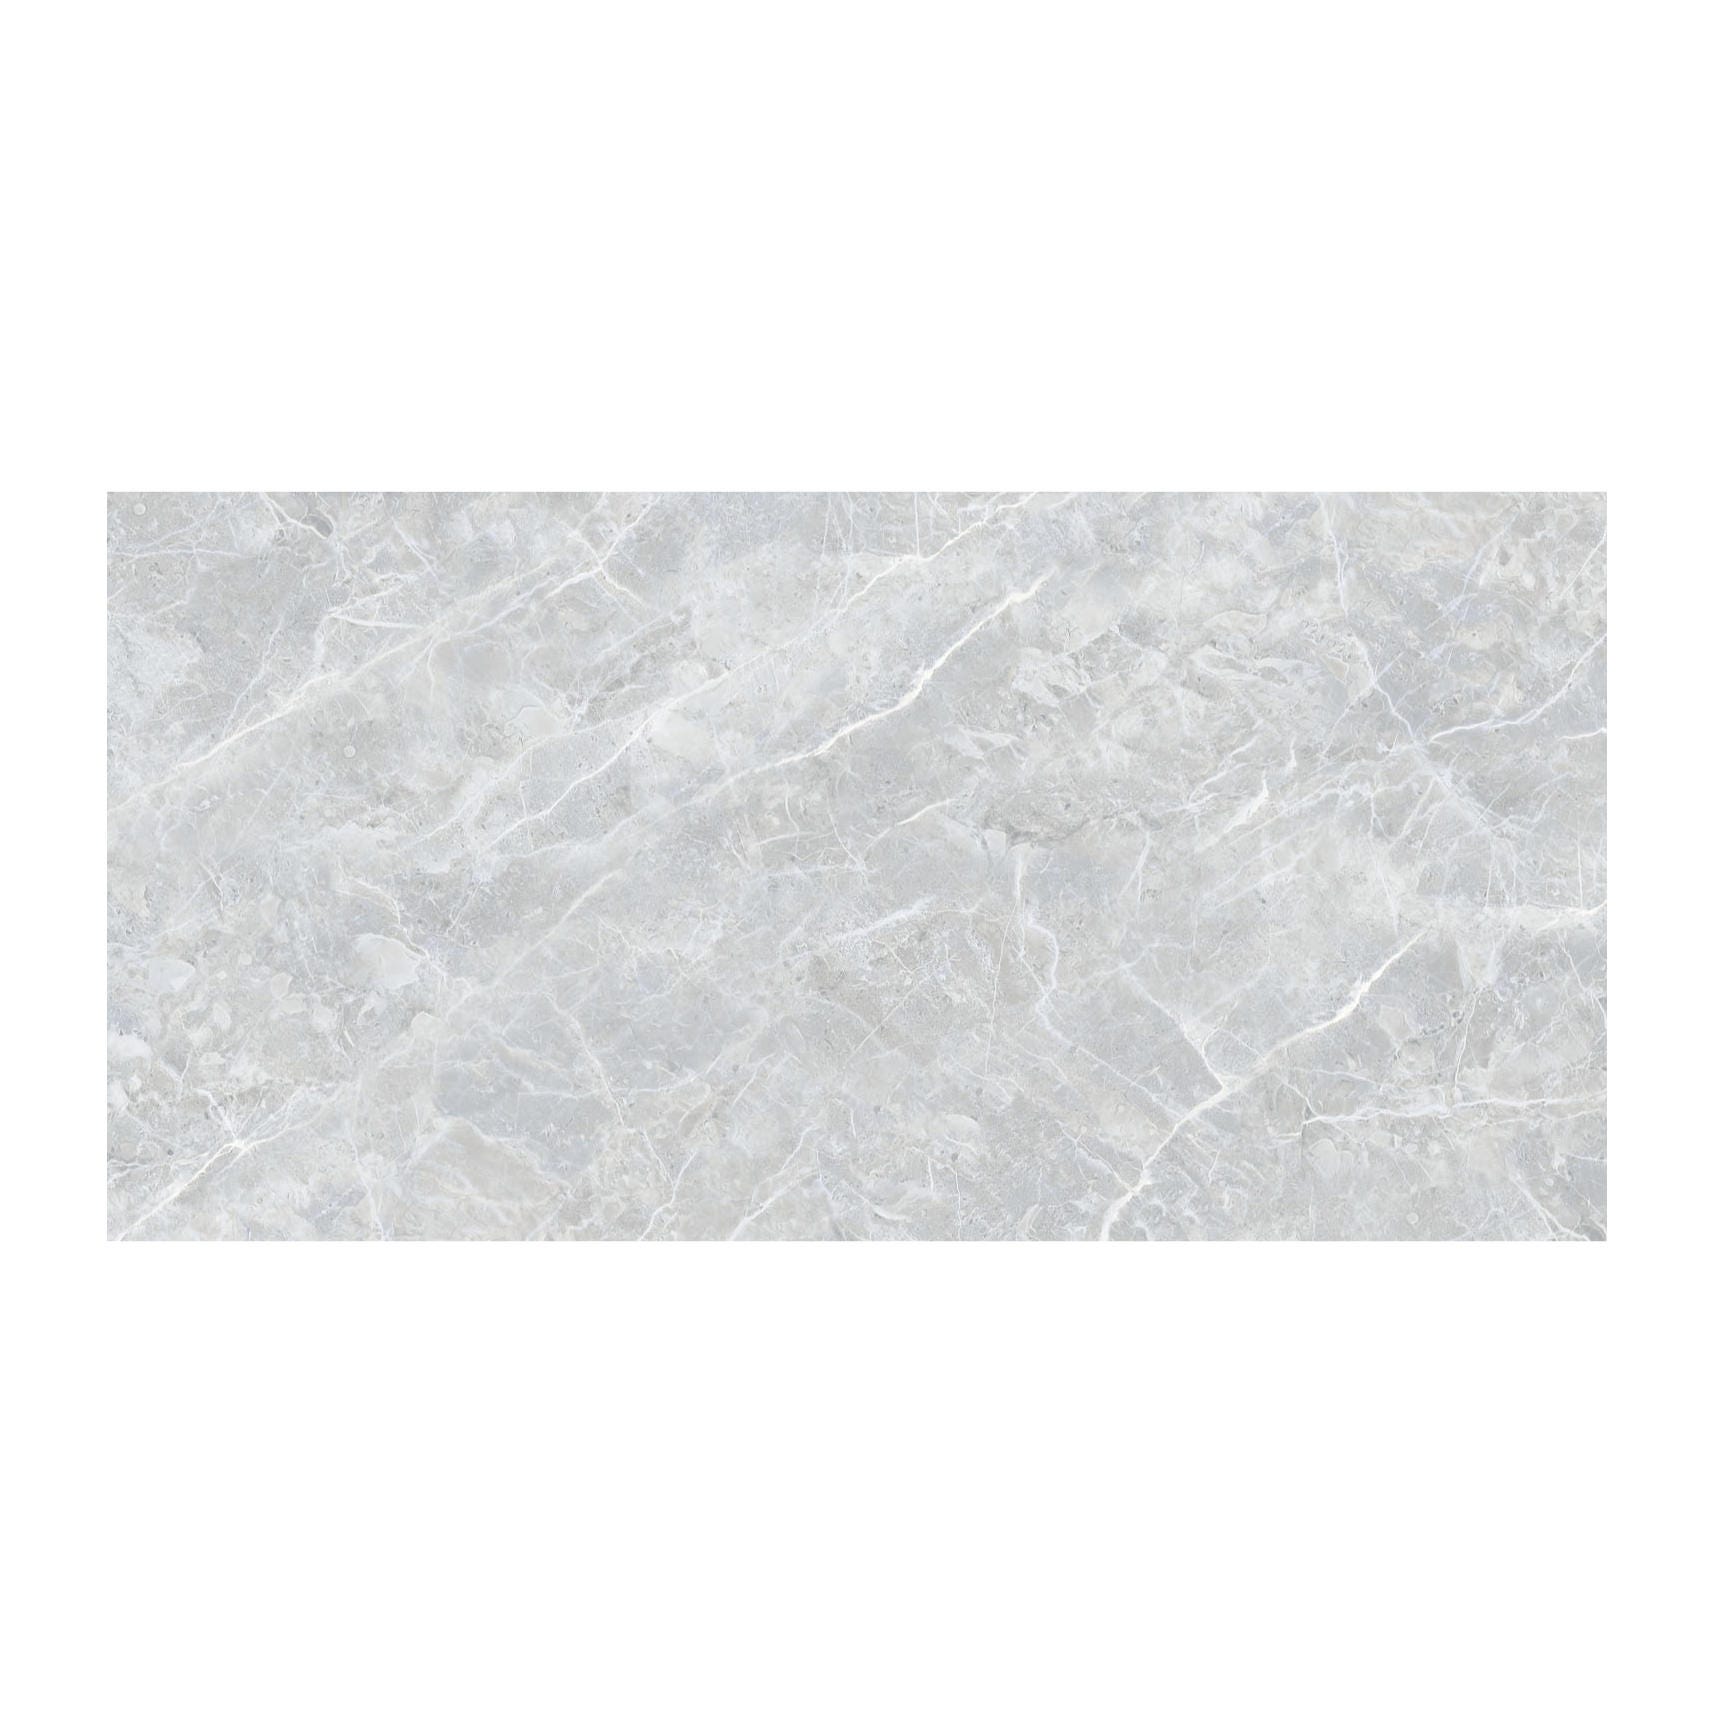 Dedeman - Faianta baie / bucatarie 4845 Medina Light Grey, gri, lucioasa, marmura, 25 x 50 cm - Dedicat planurilor tale